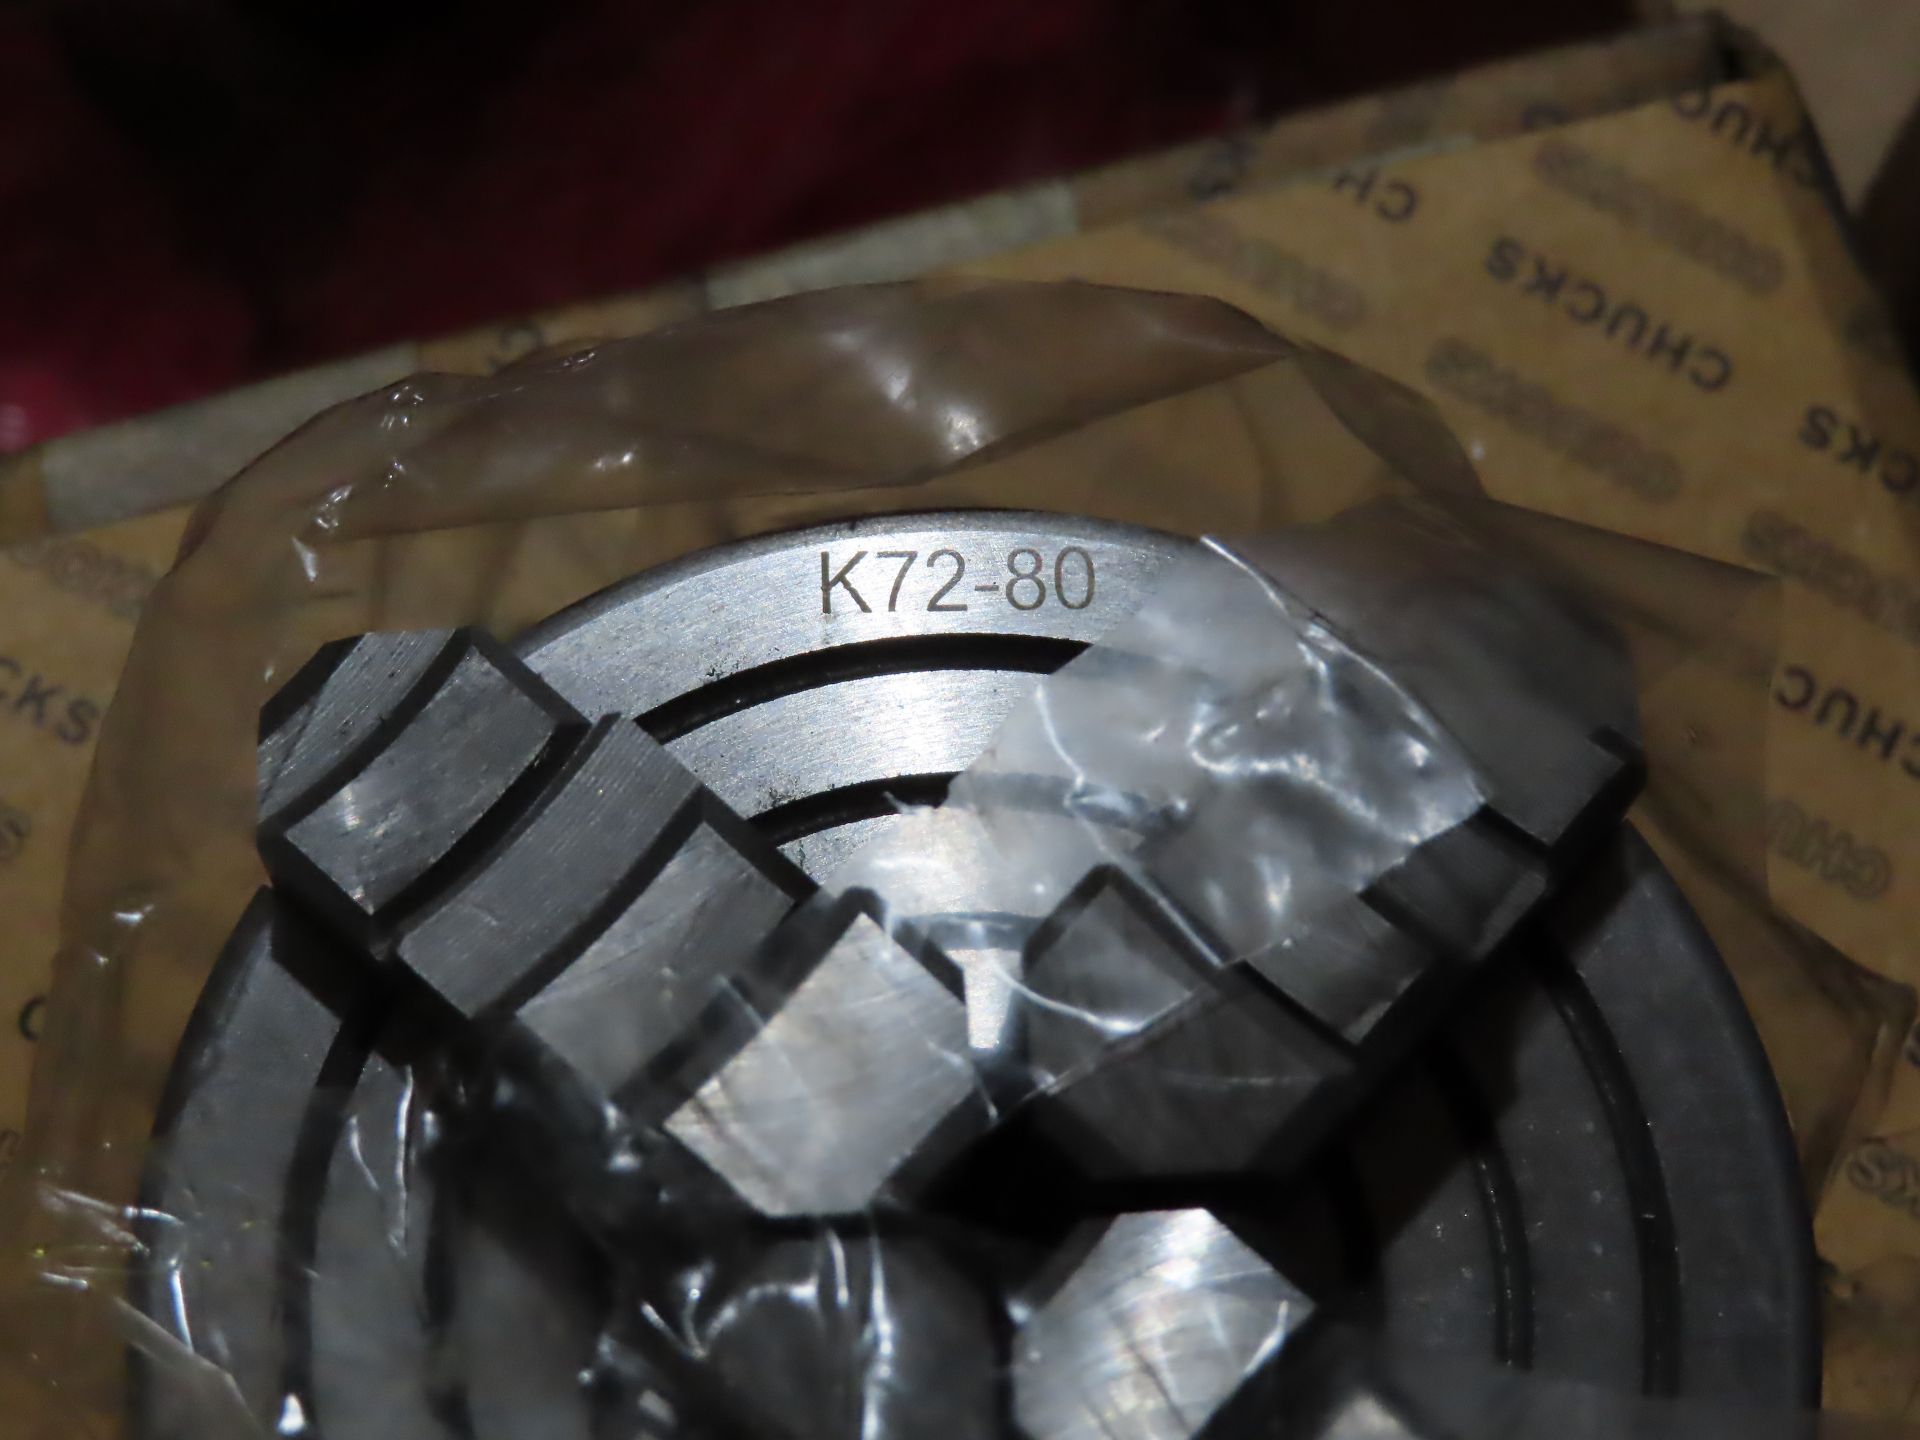 Frejoth International model K72-80, 80mm chuck, new in box, as always with Brolyn LLC auctions, - Image 3 of 3